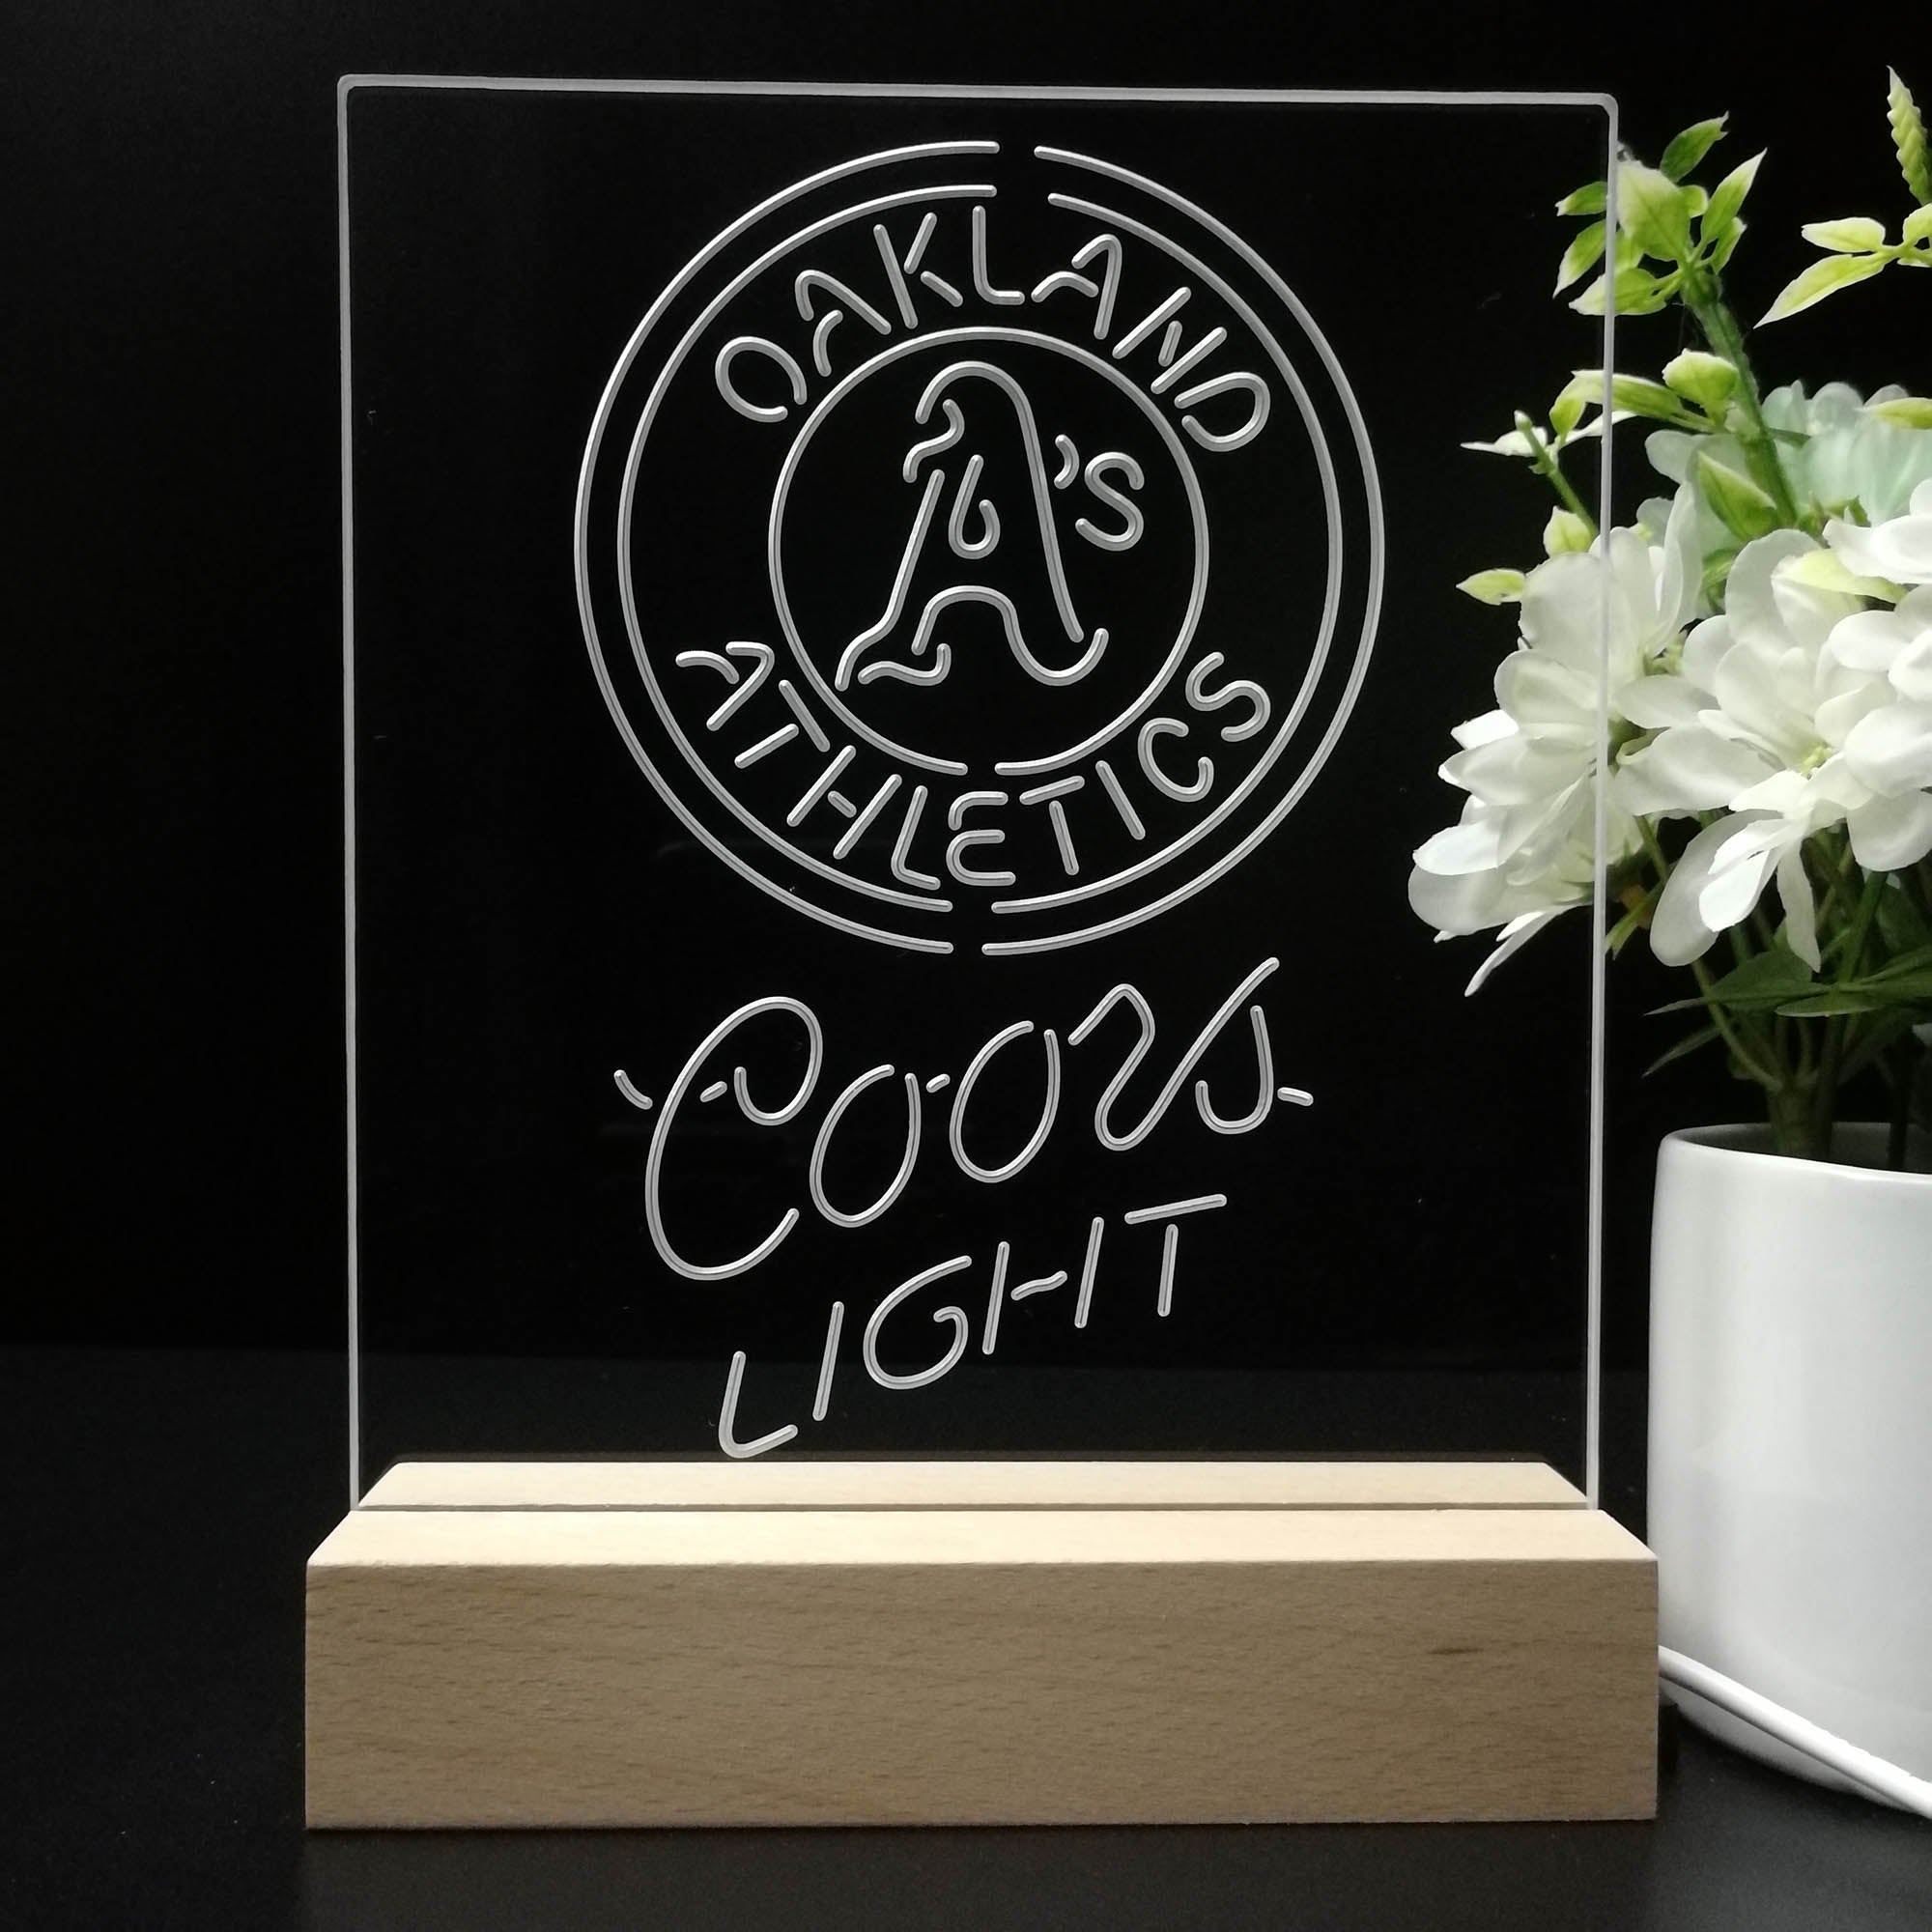 Oakland Athletics Coors Light Neon Sign Pub Bar Lamp